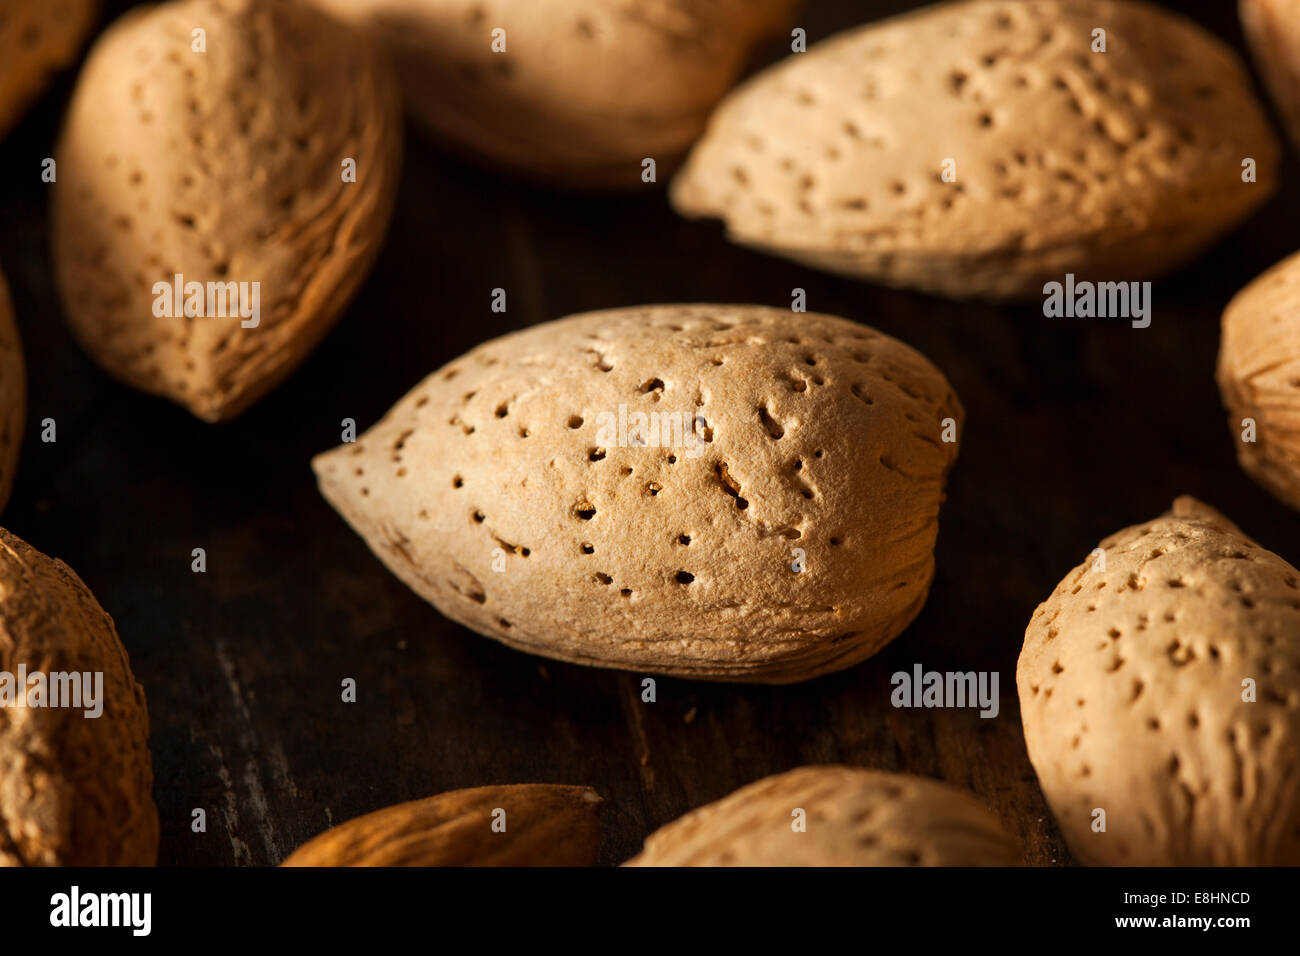 Raw Unshelled Organic Almonds on a Background Stock Photo